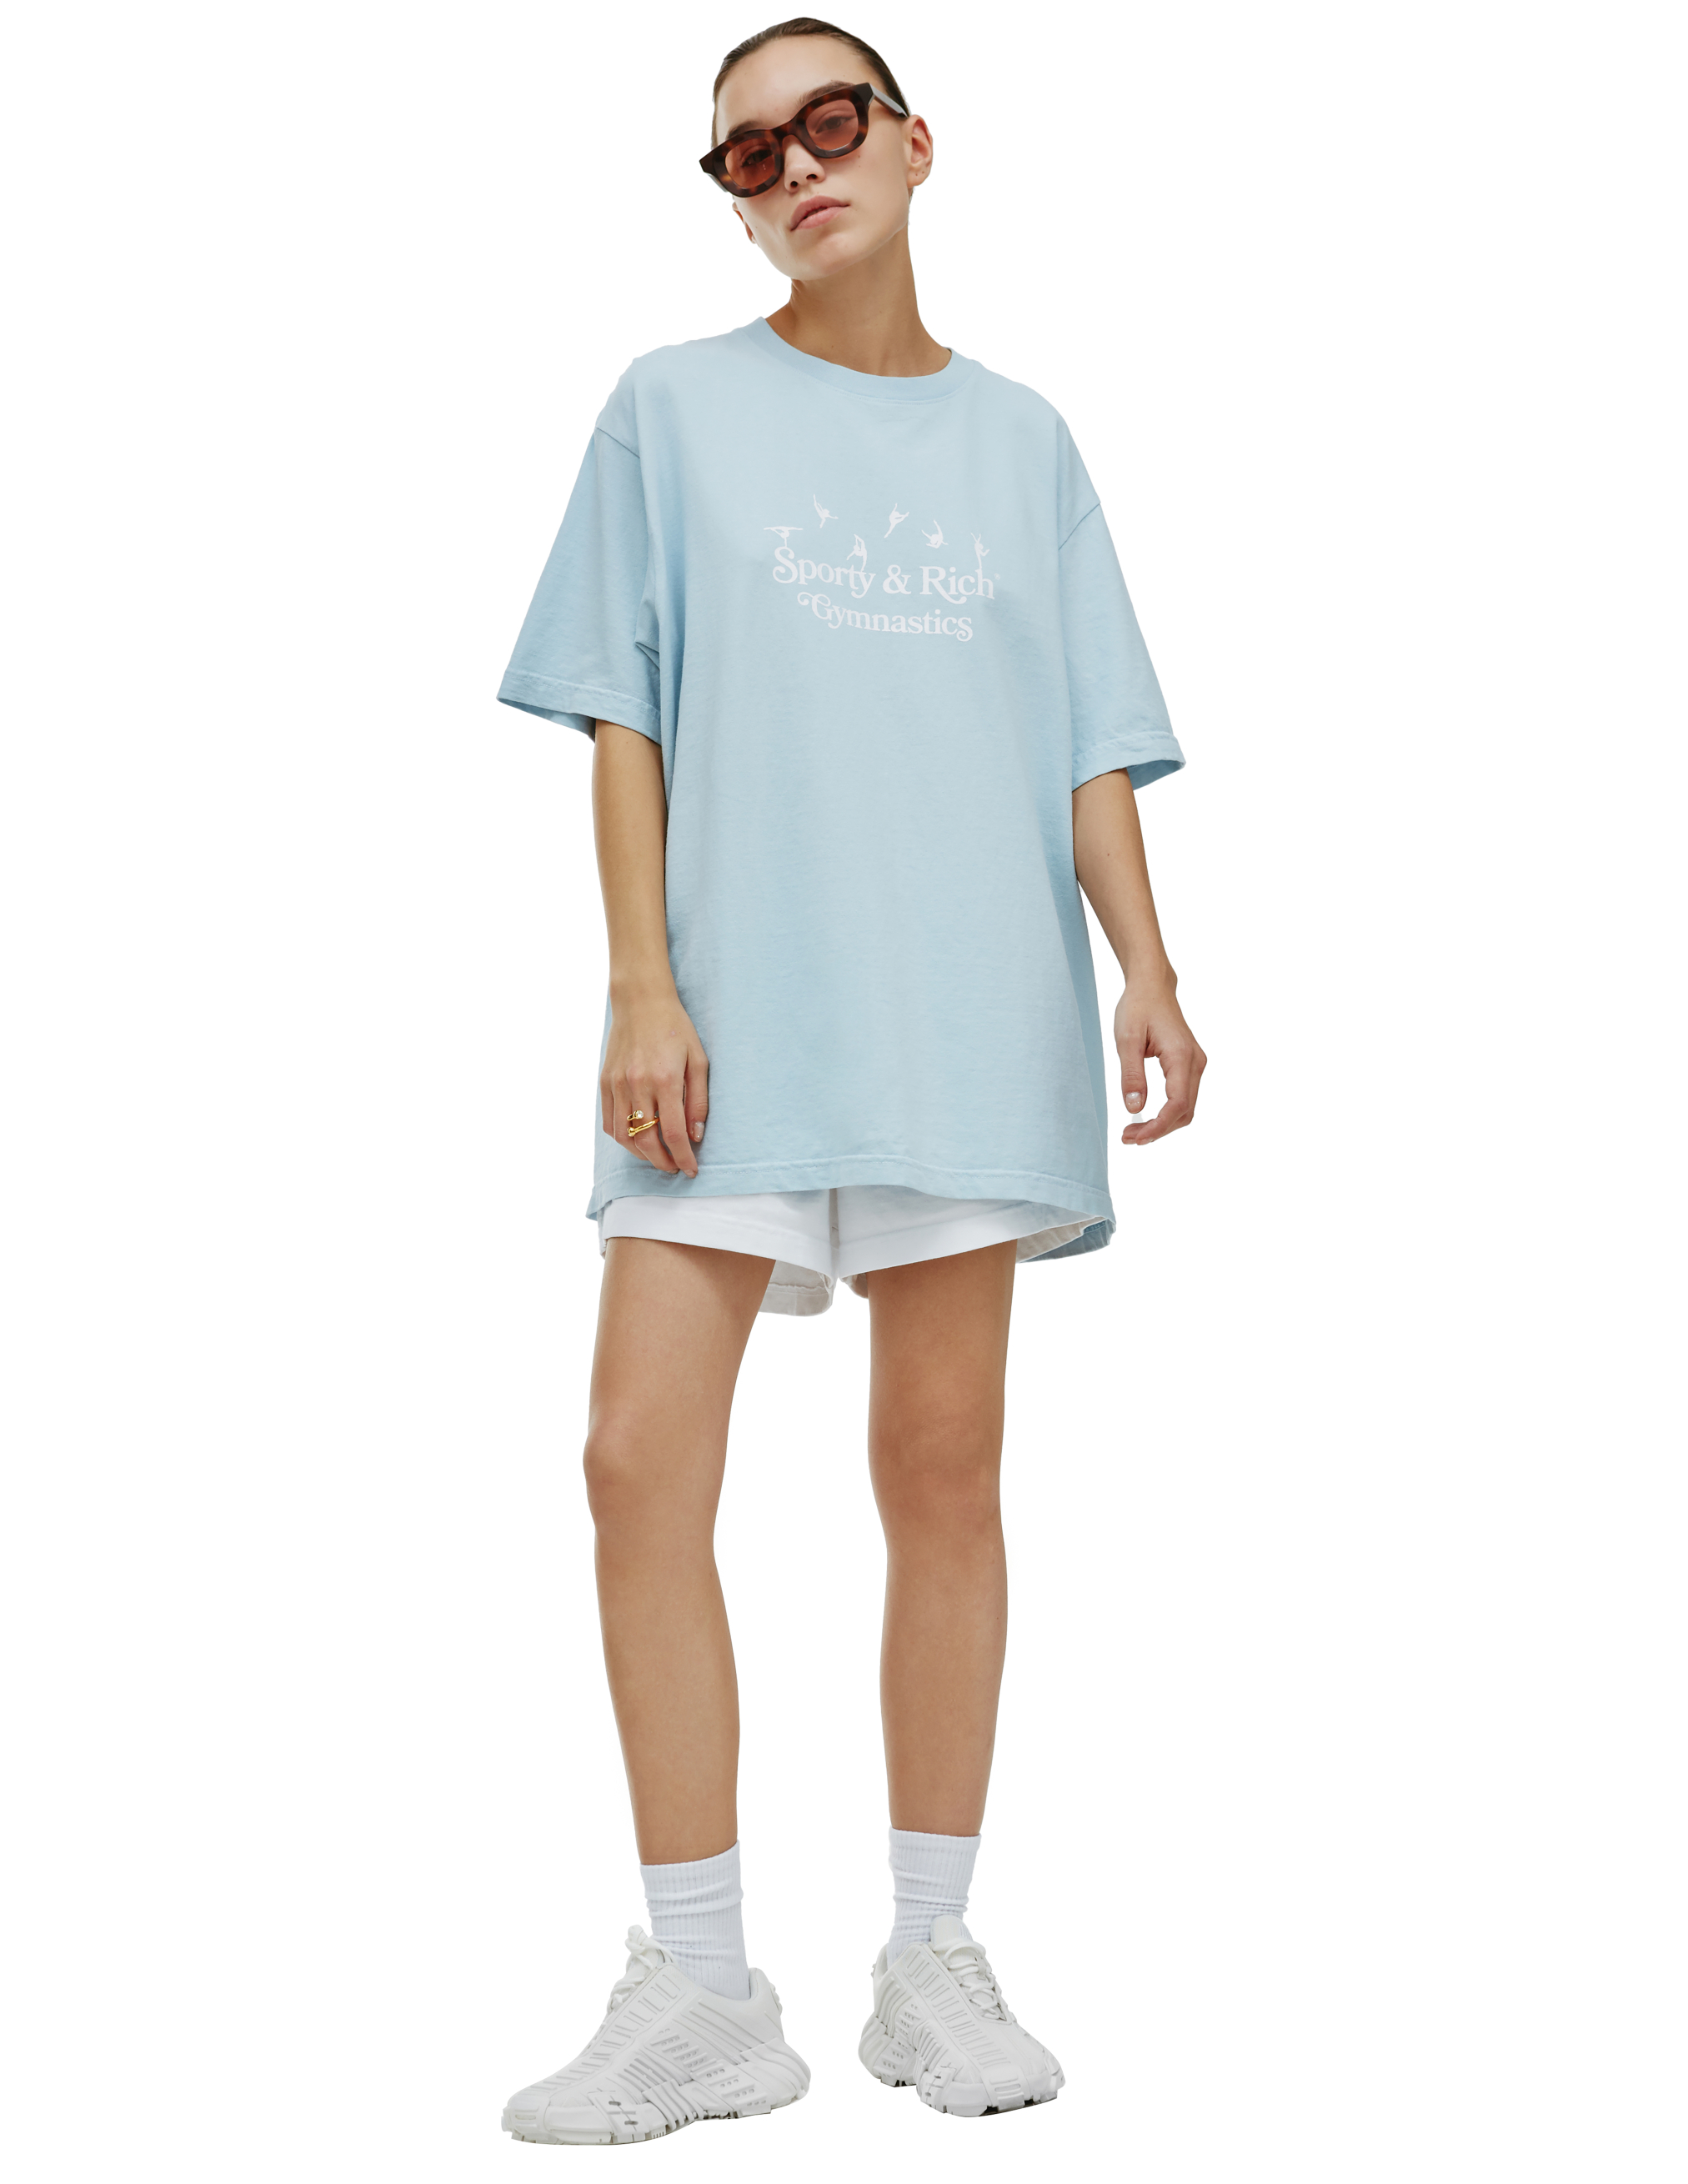 Голубая футболка с принтом Gymnastics SPORTY & RICH TS487BB, размер L;M;XL - фото 1